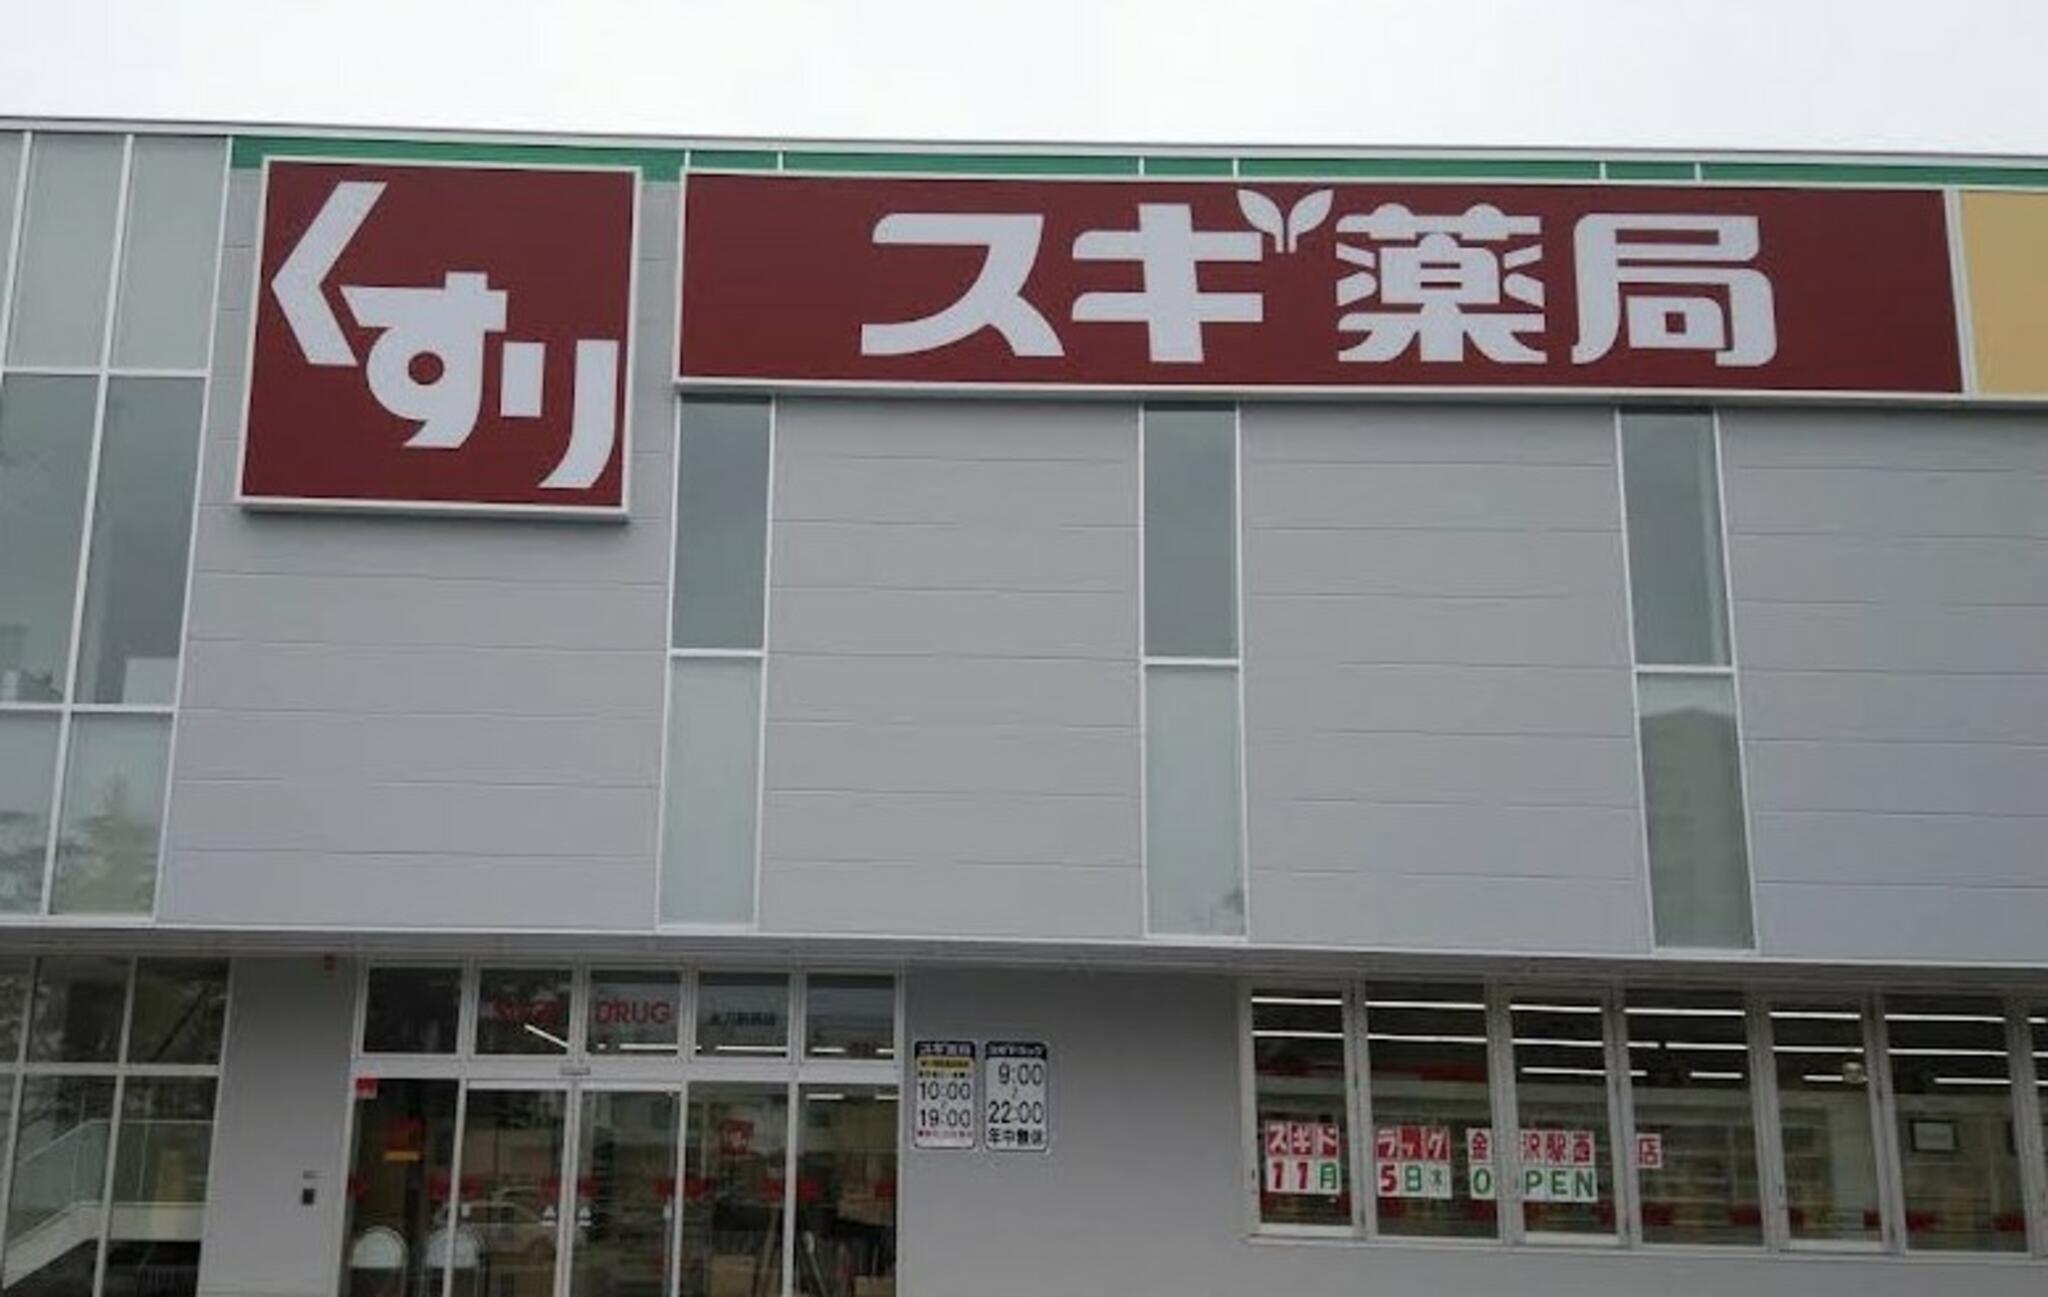 スギ薬局 金沢駅西店の代表写真4